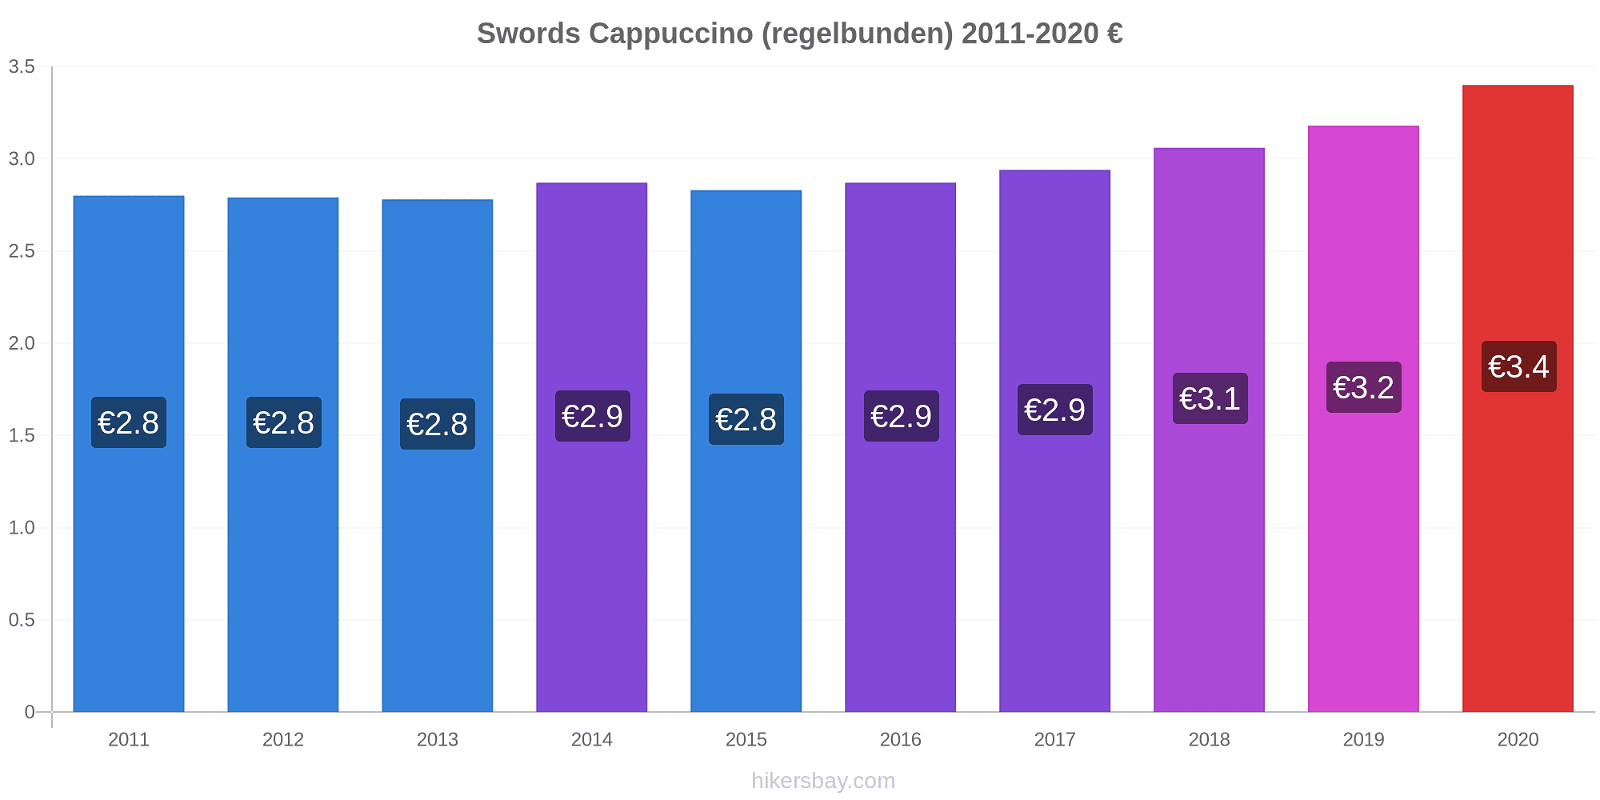 Swords prisförändringar Cappuccino (regelbunden) hikersbay.com